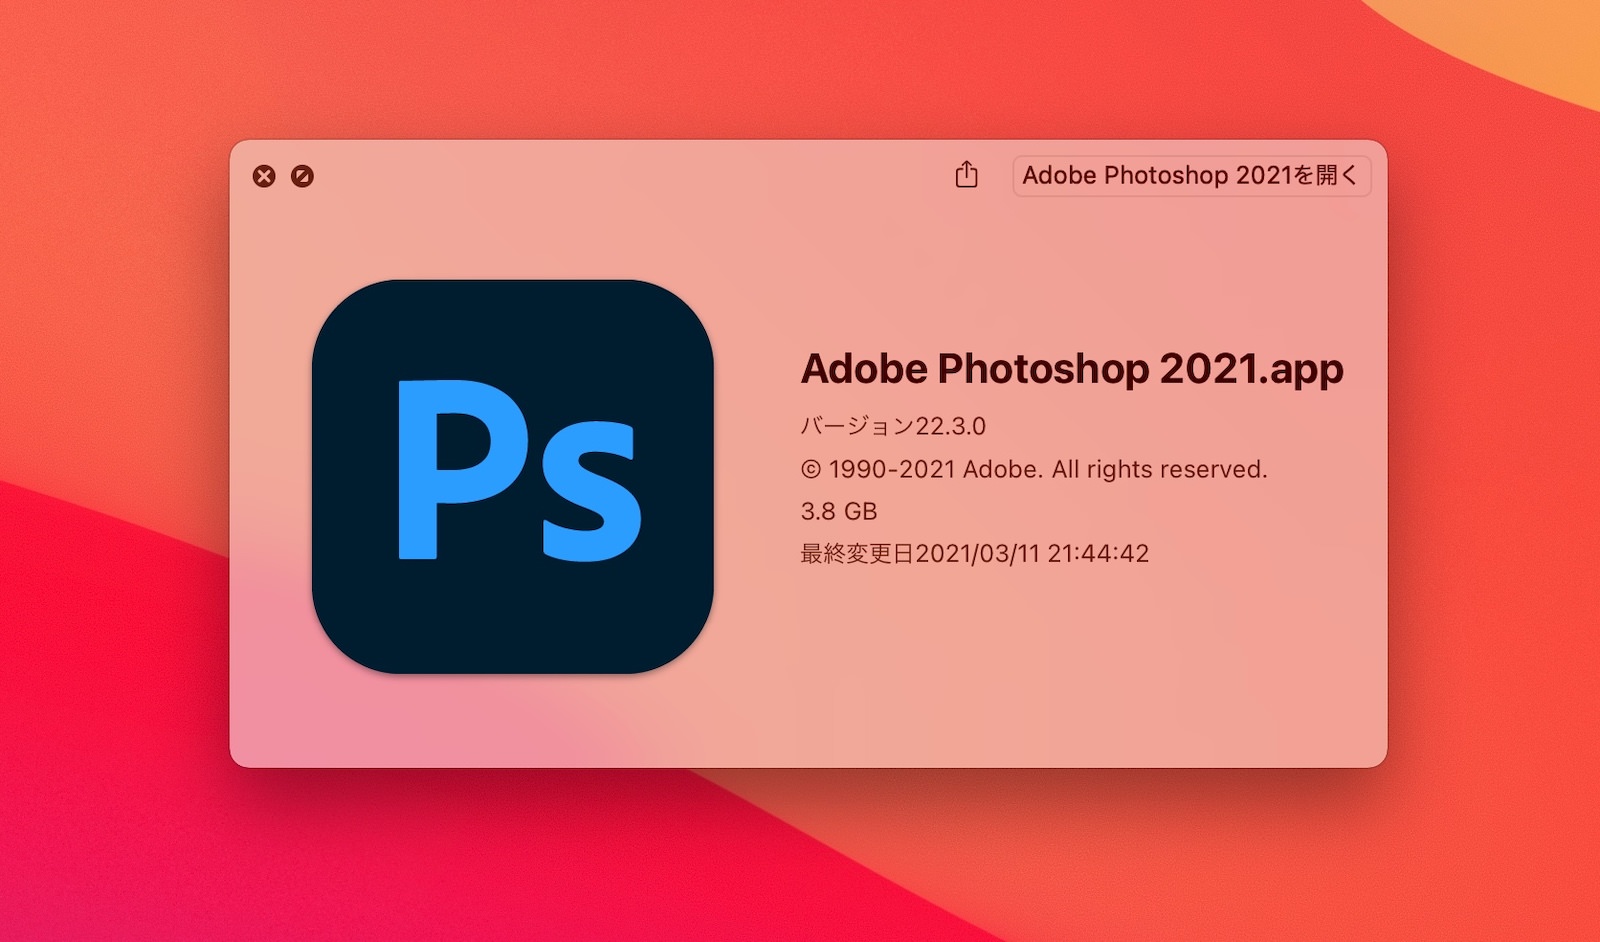 Adobe photoshop 2021 app